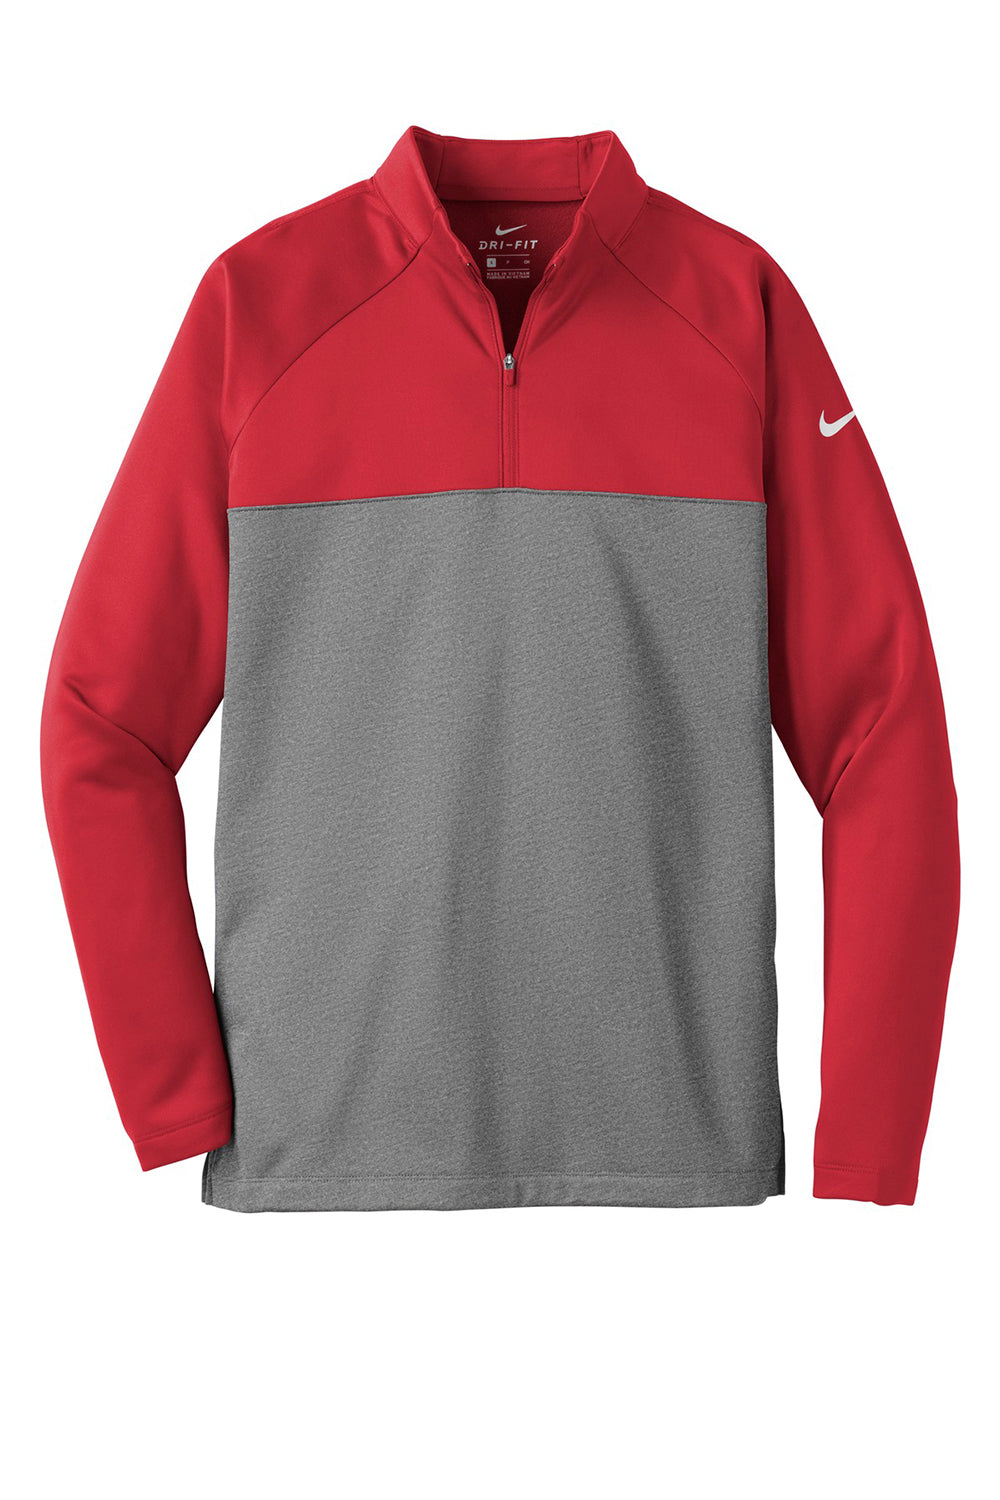 Nike NKAH6254 Mens Therma-Fit Moisture Wicking Fleece 1/4 Zip Sweatshirt Gym Red/Heather Grey Flat Front